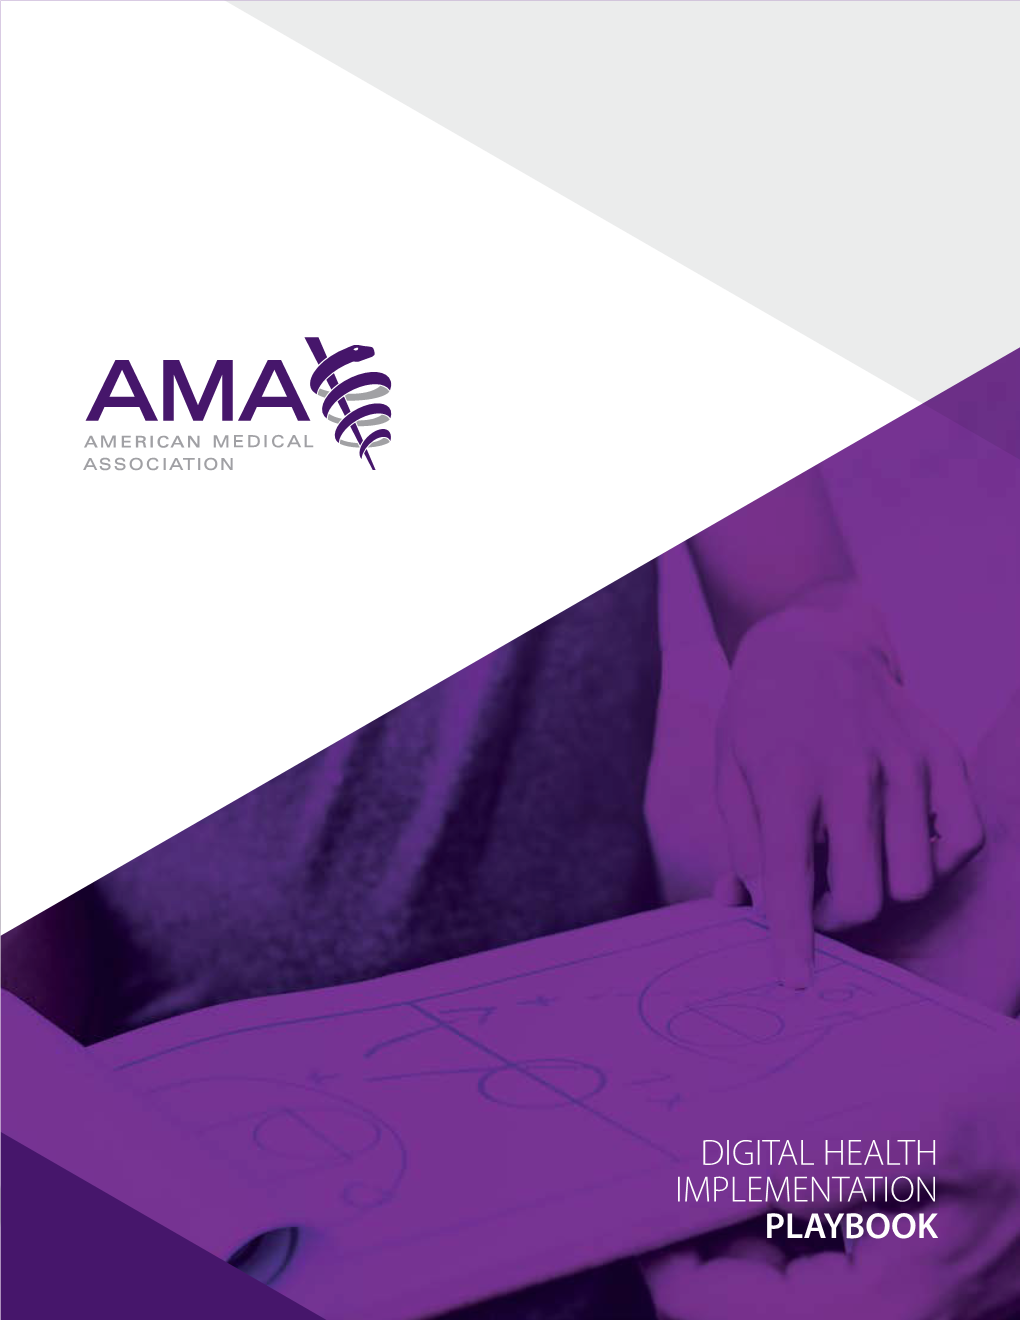 AMA Digital Health Implementation Playbook